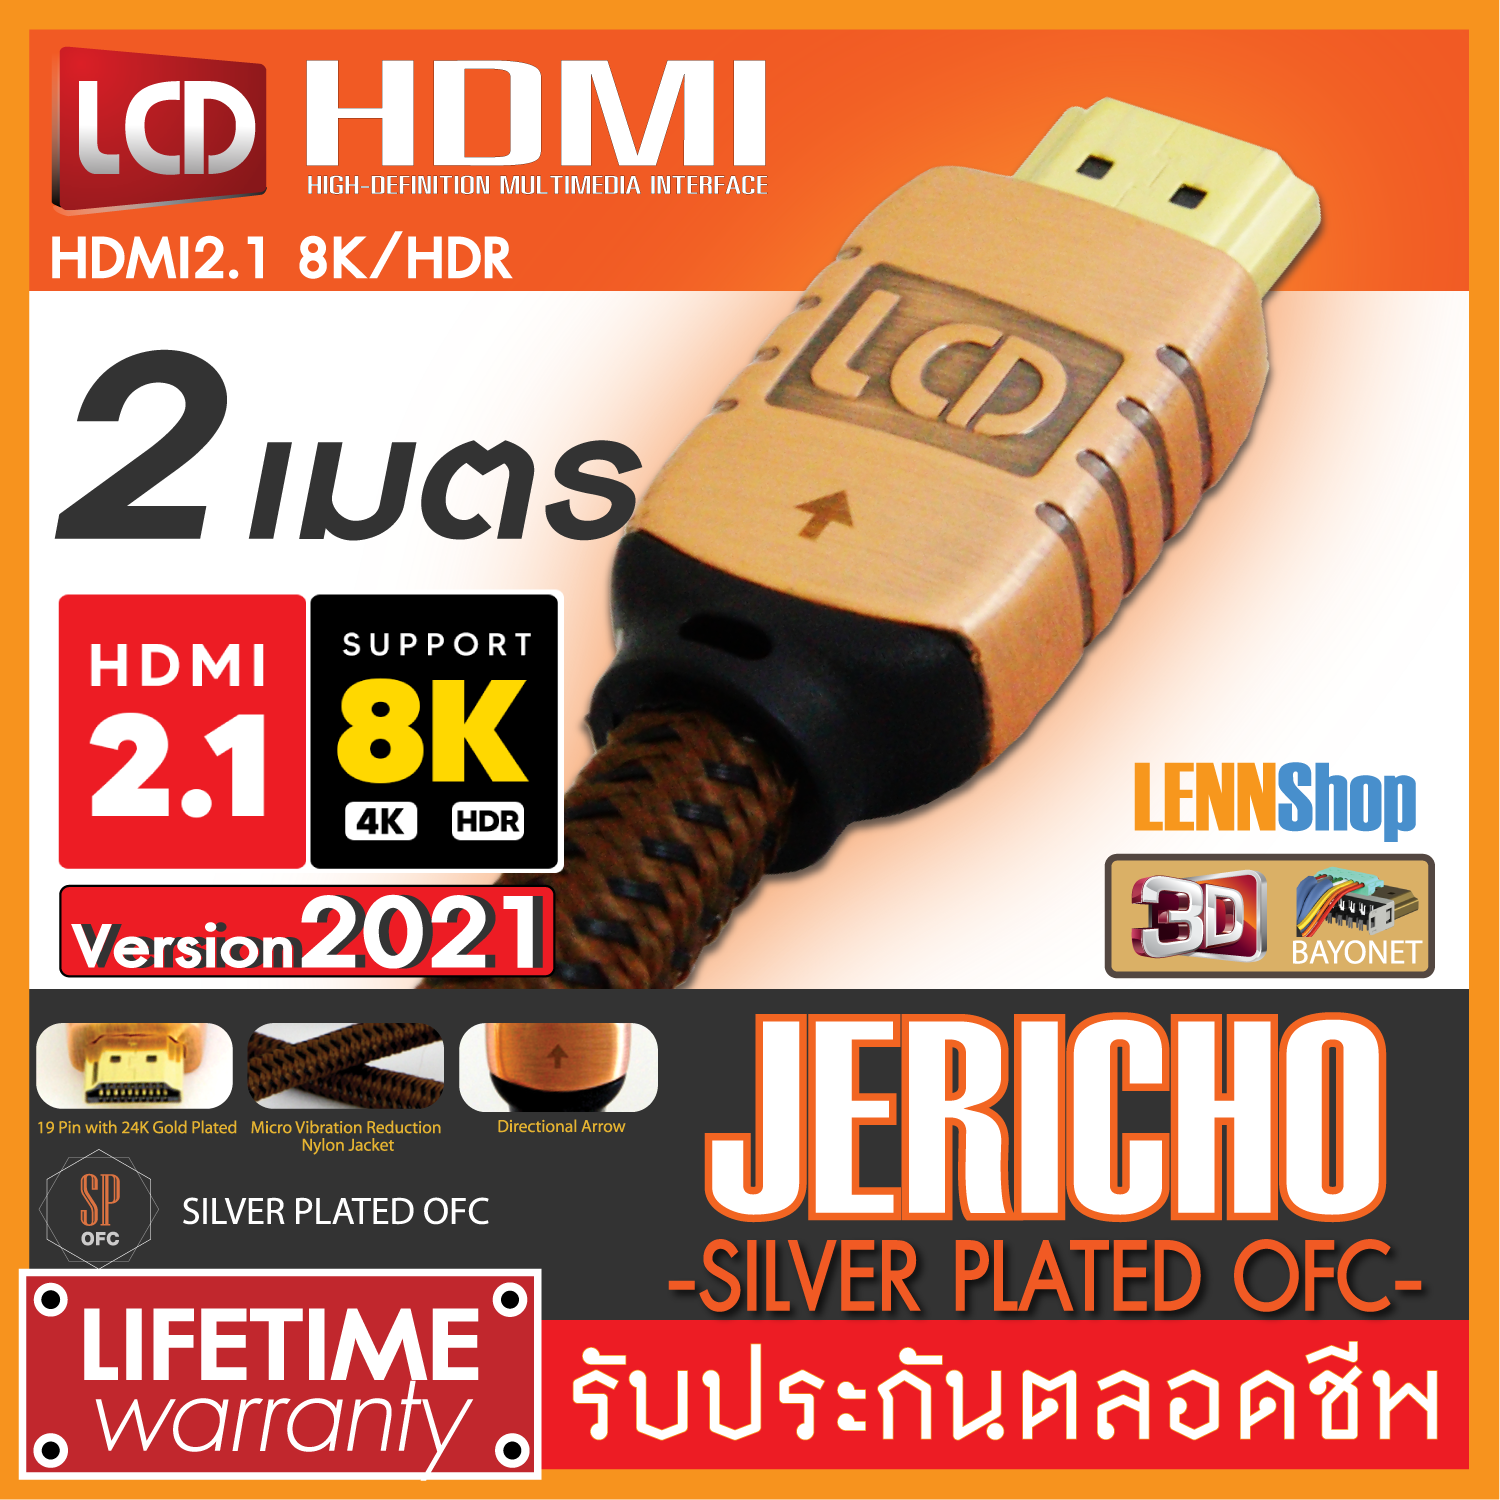 JERICHO 2M New Version 2021 HDMI SilverPlate OFC ของแท้ 8K/HDR HDMI V2.1 รองรับระบบภาพ 8K/HDR , 3D, ARC, Dolby Vision, H10 ระบบเสียง Dolby Atmos DtsX / ยาว 2 เมตร / LENNSHOP